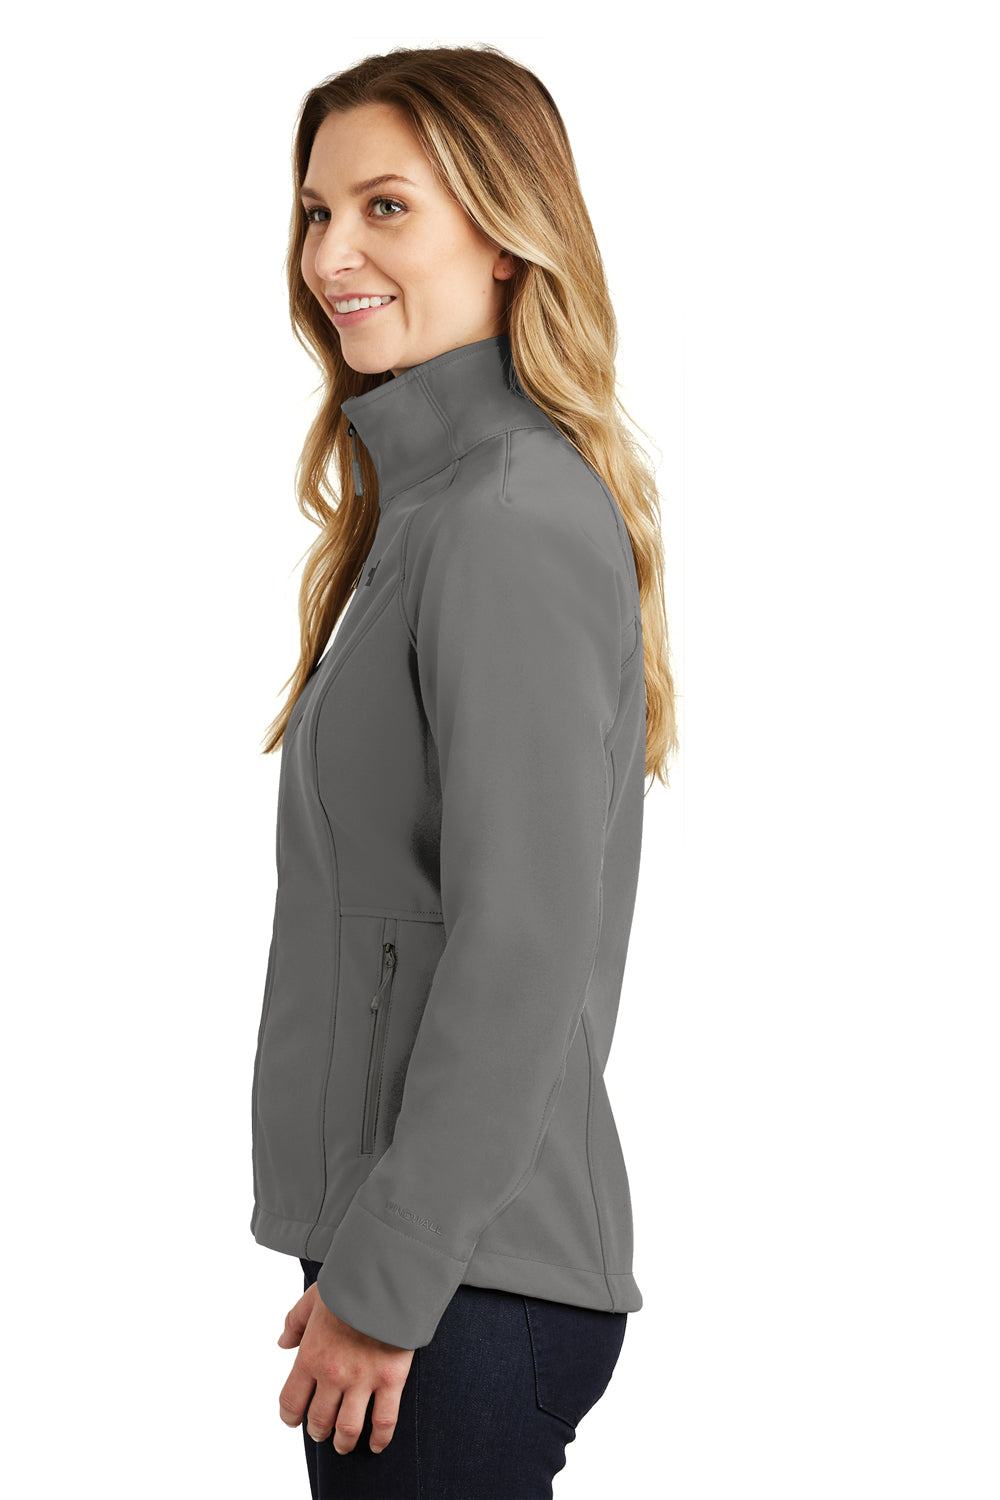 The North Face NF0A3LGU Womens Apex Barrier Wind & Resistant Full Zip Jacket Asphalt Grey Side